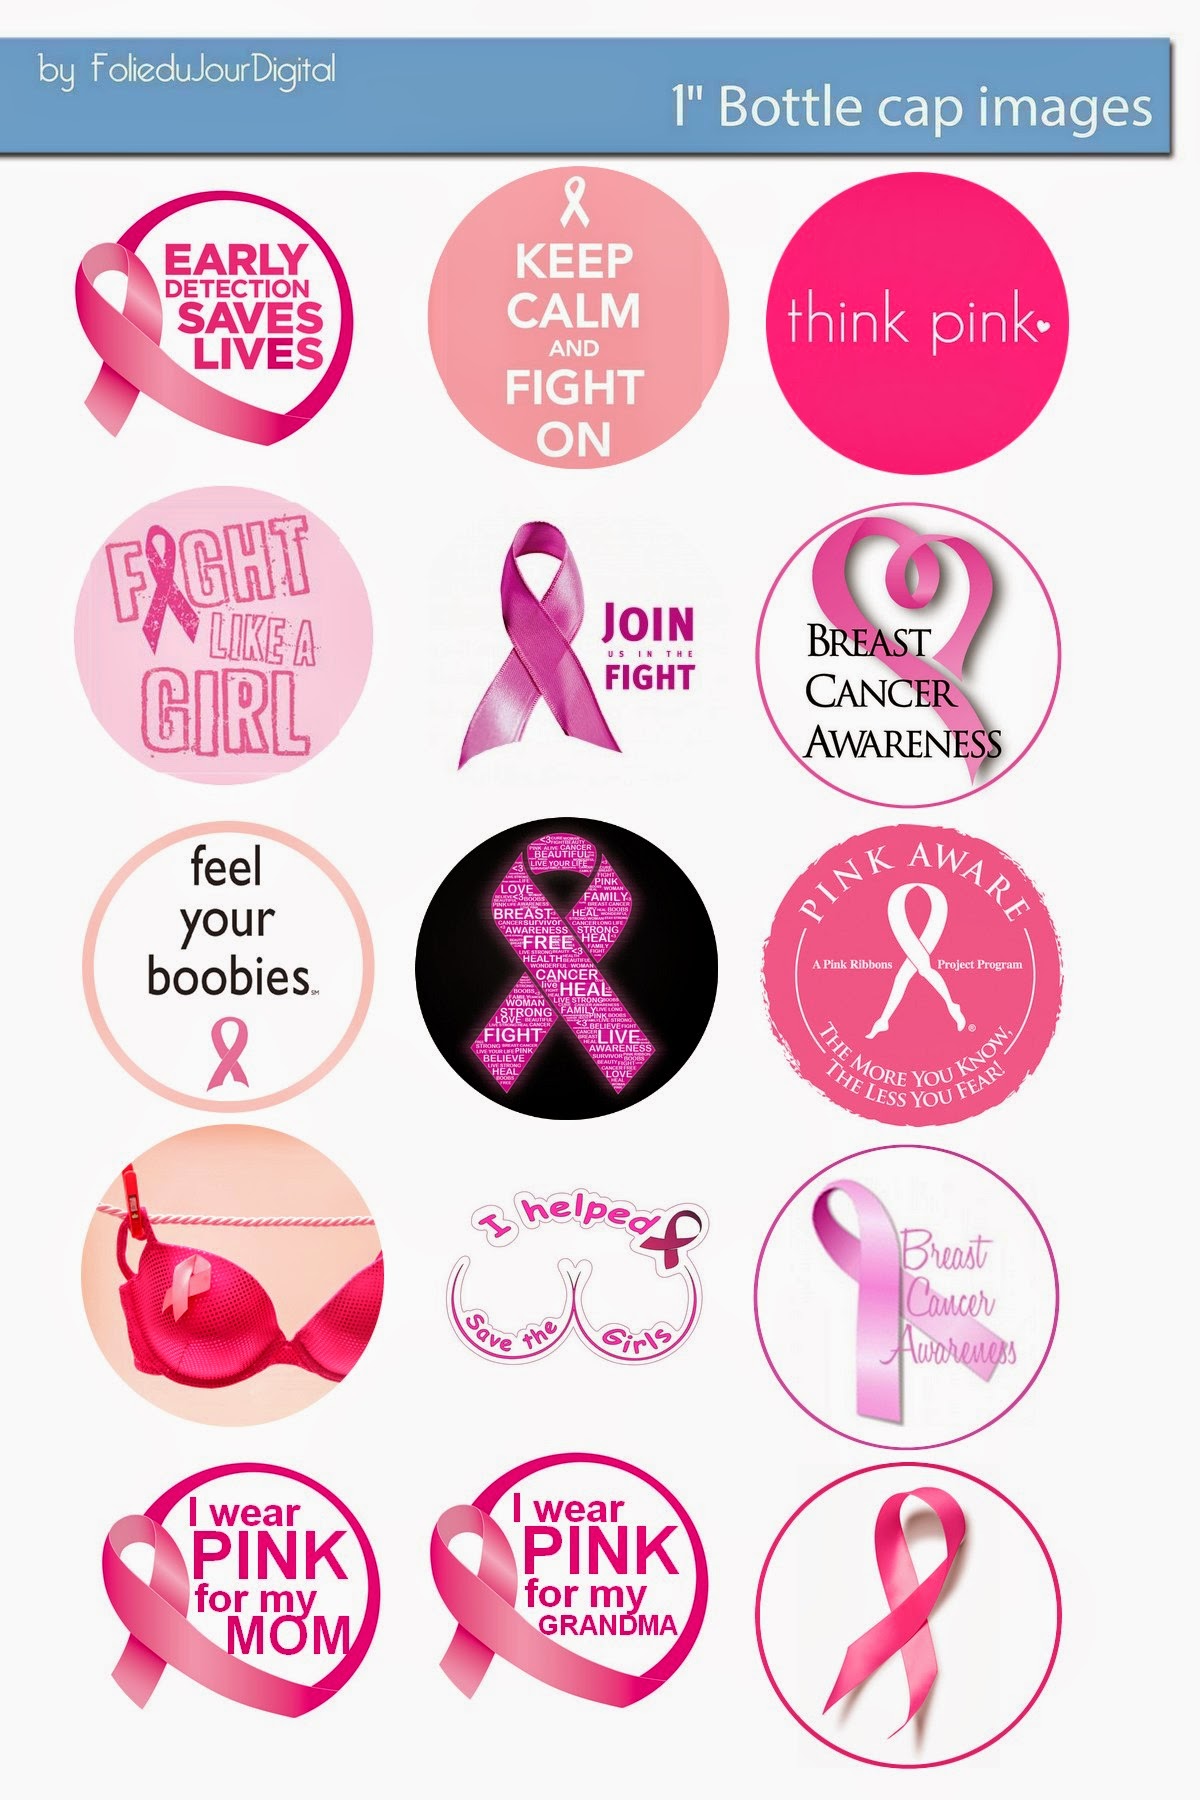 free-bottle-cap-images-breast-cancer-pink-ribbon-awareness-free-bottle